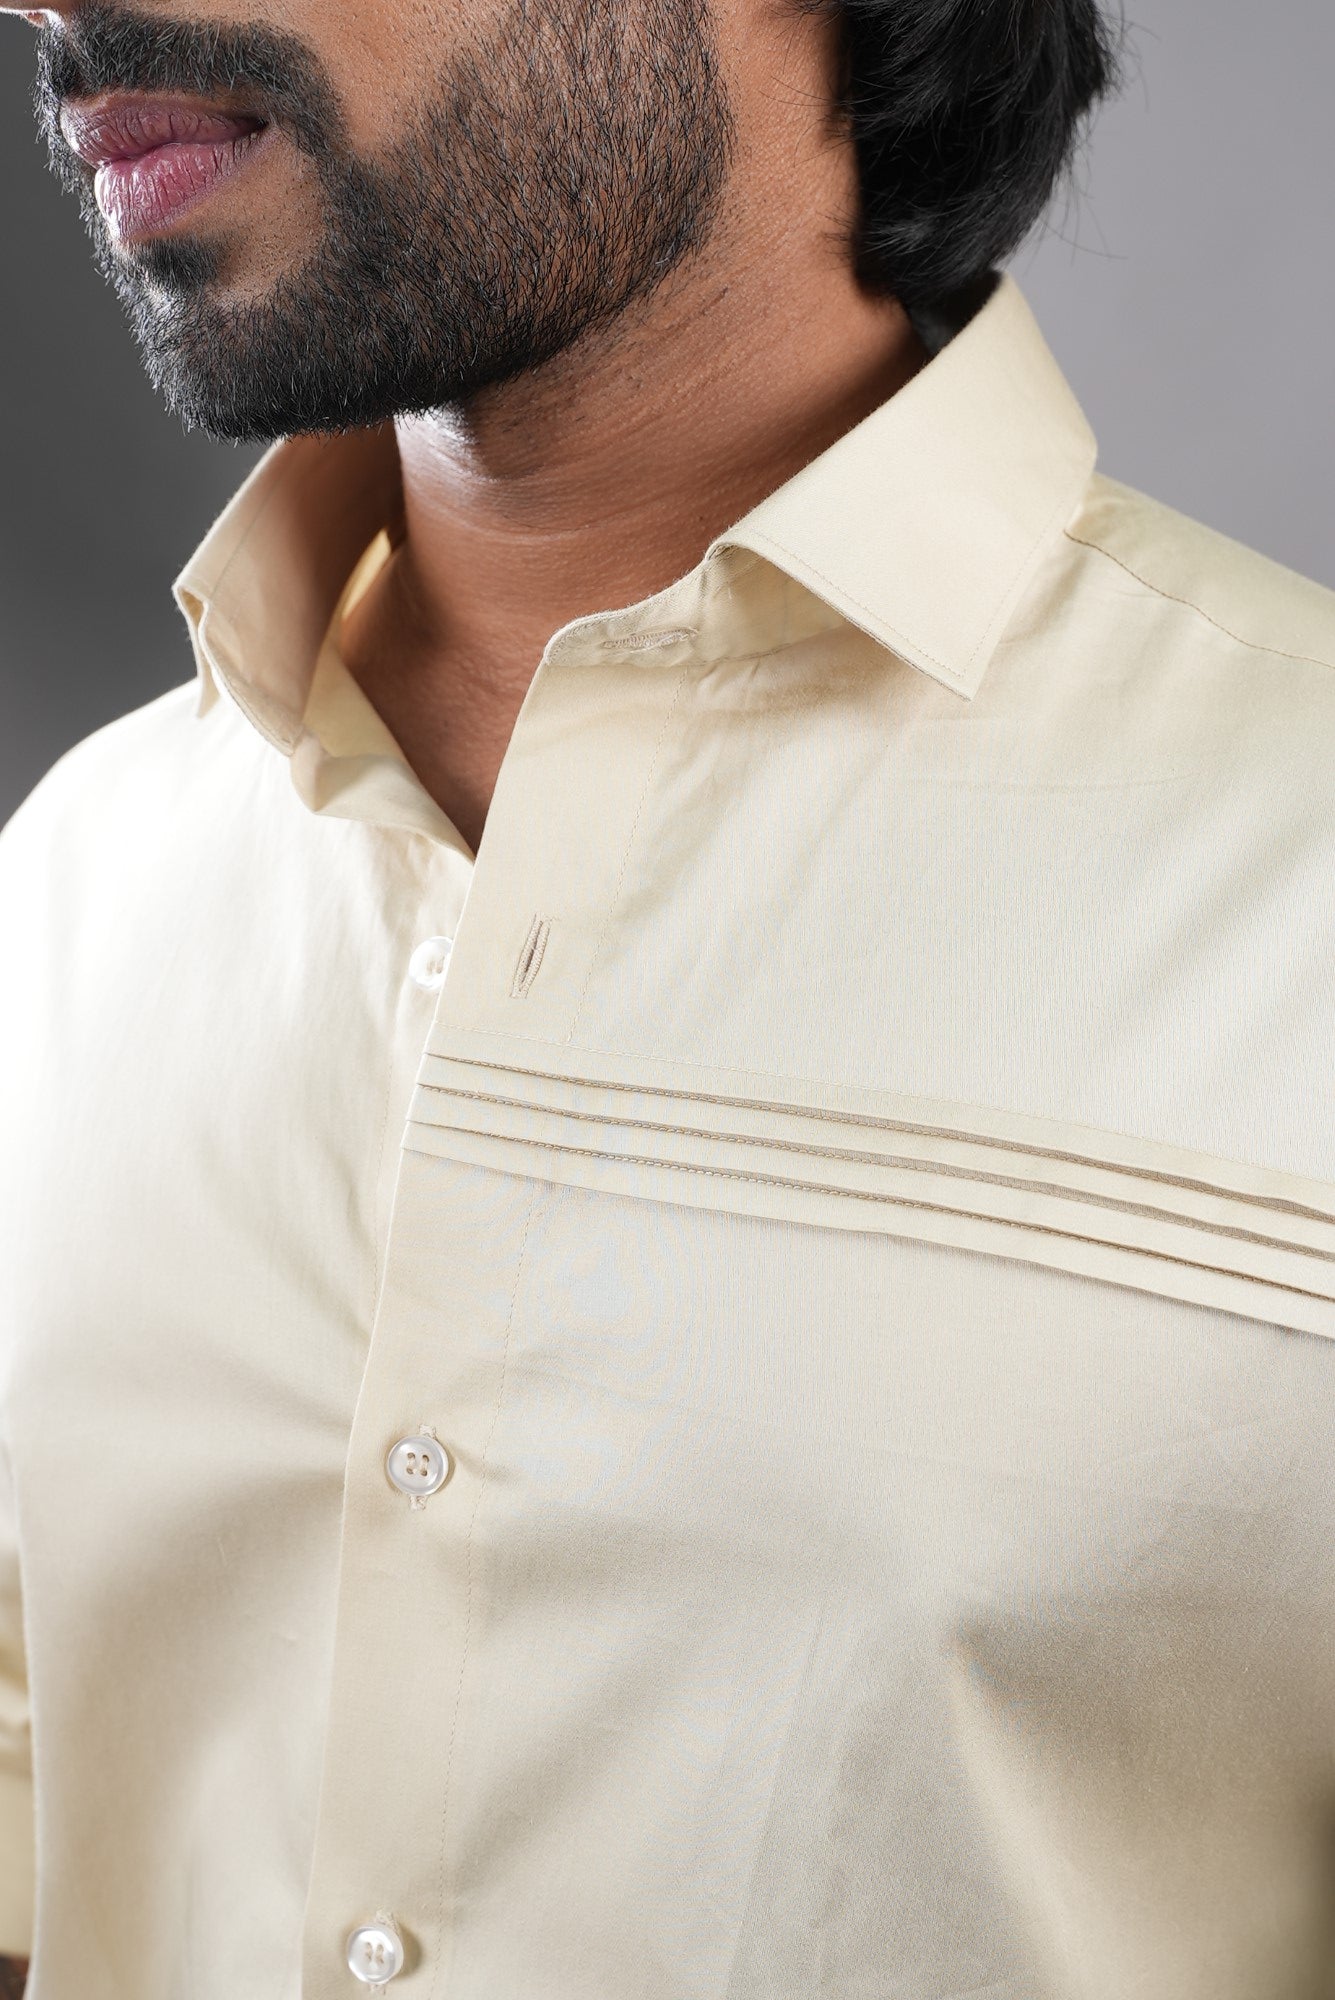 Men's Biege Color Crema Pintuck Shirt Full Sleeves Casual Shirt - Hilo Design